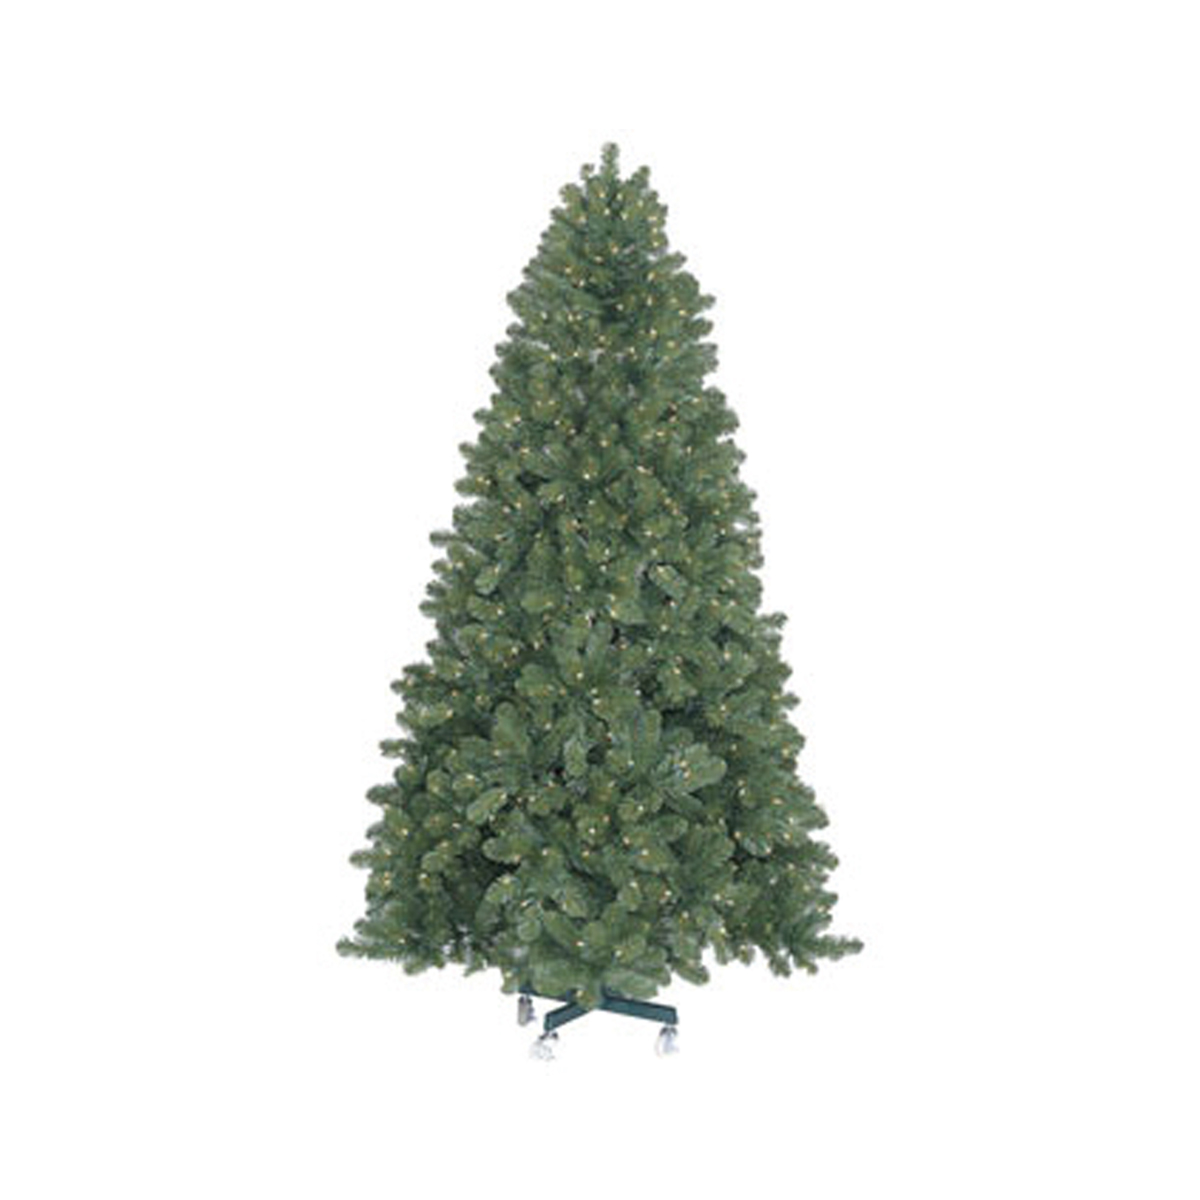 Everest Fir Christmas Tree - Full-Frame - Warm White LEDs - One-Plug Pole - 6.5ft Tall